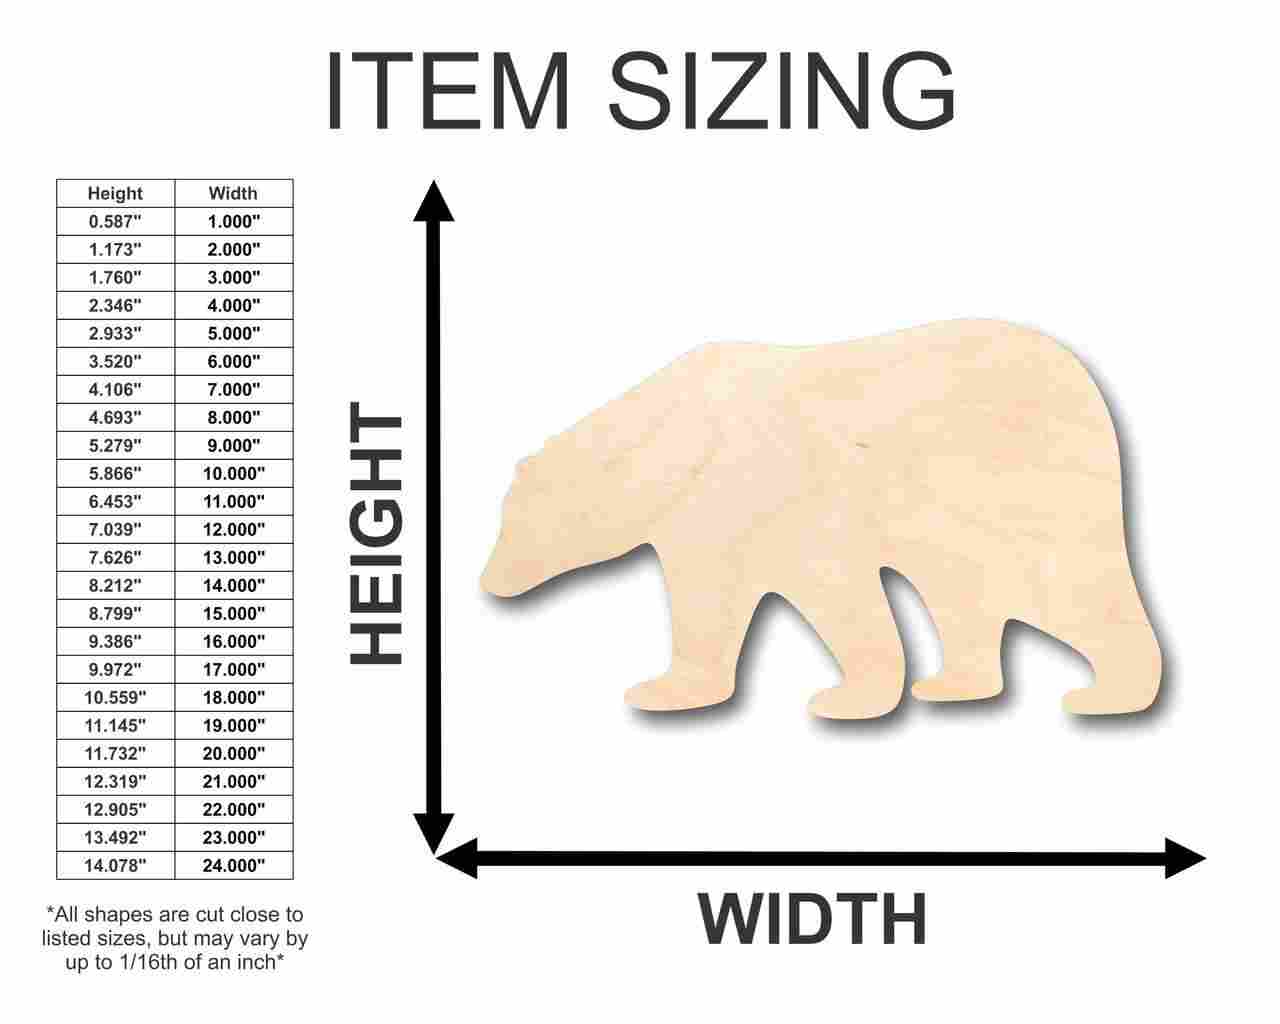 Unfinished Wooden Polar Bear Shape - Animal - Craft - up to 24